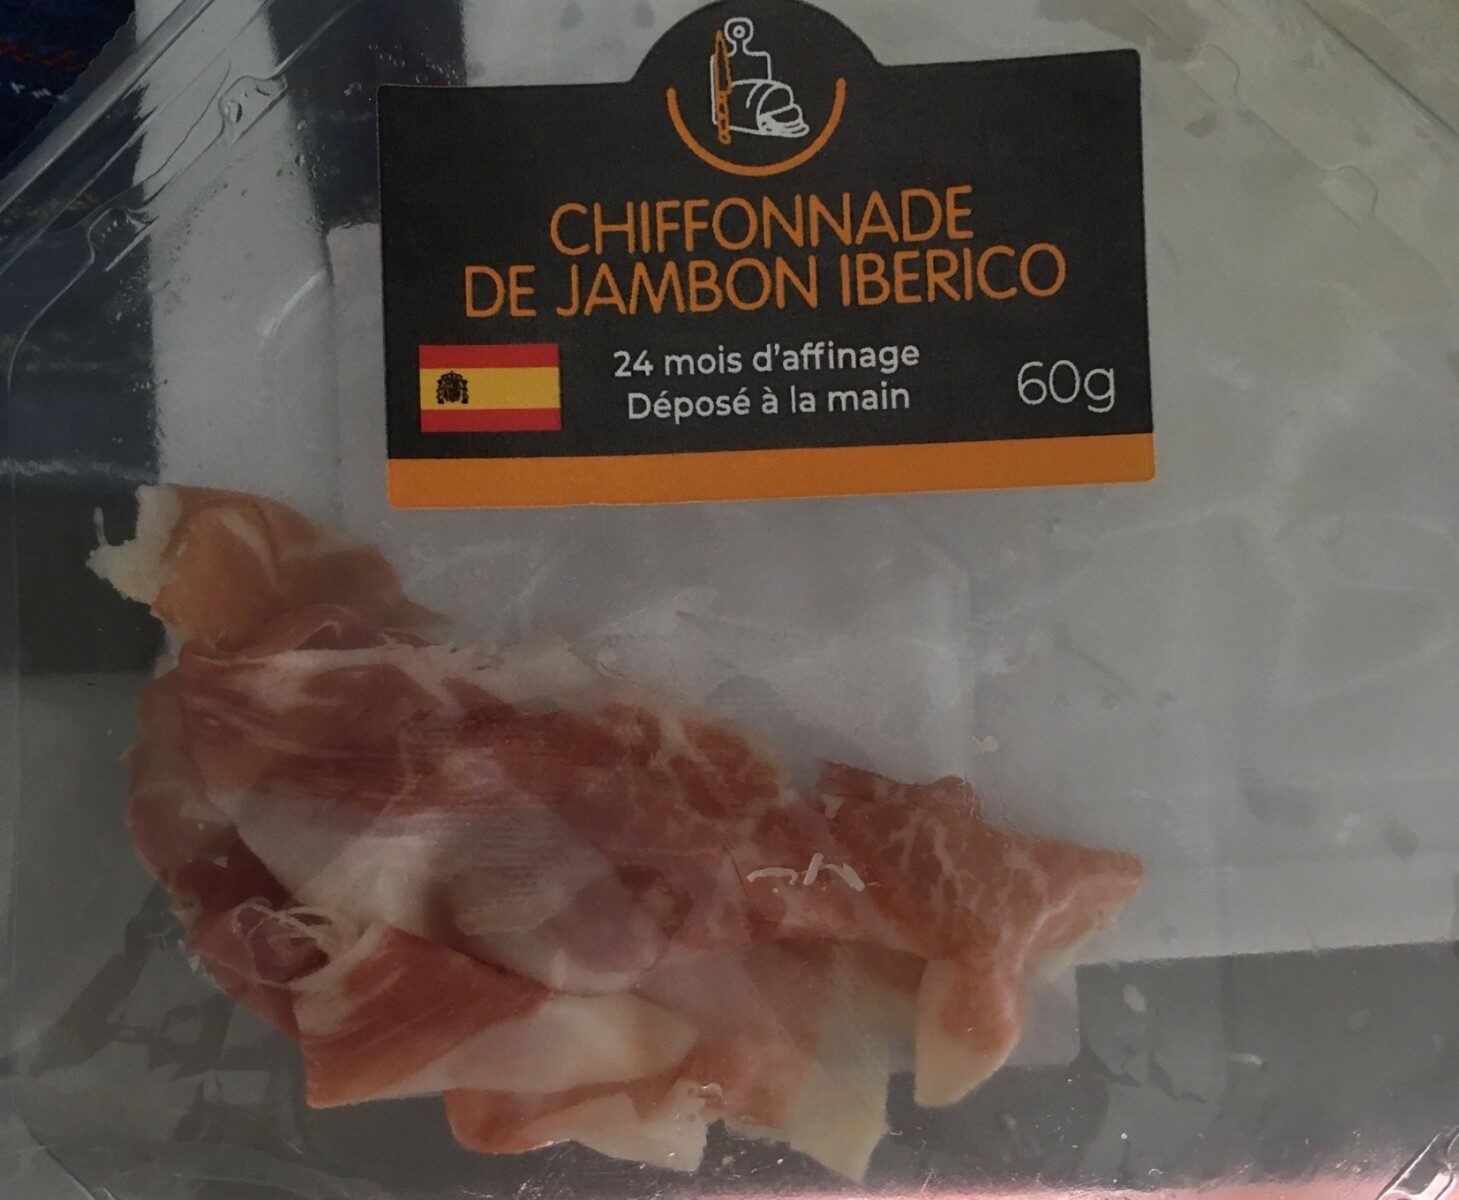 Chiffonnade de jambon iberico - Product - fr